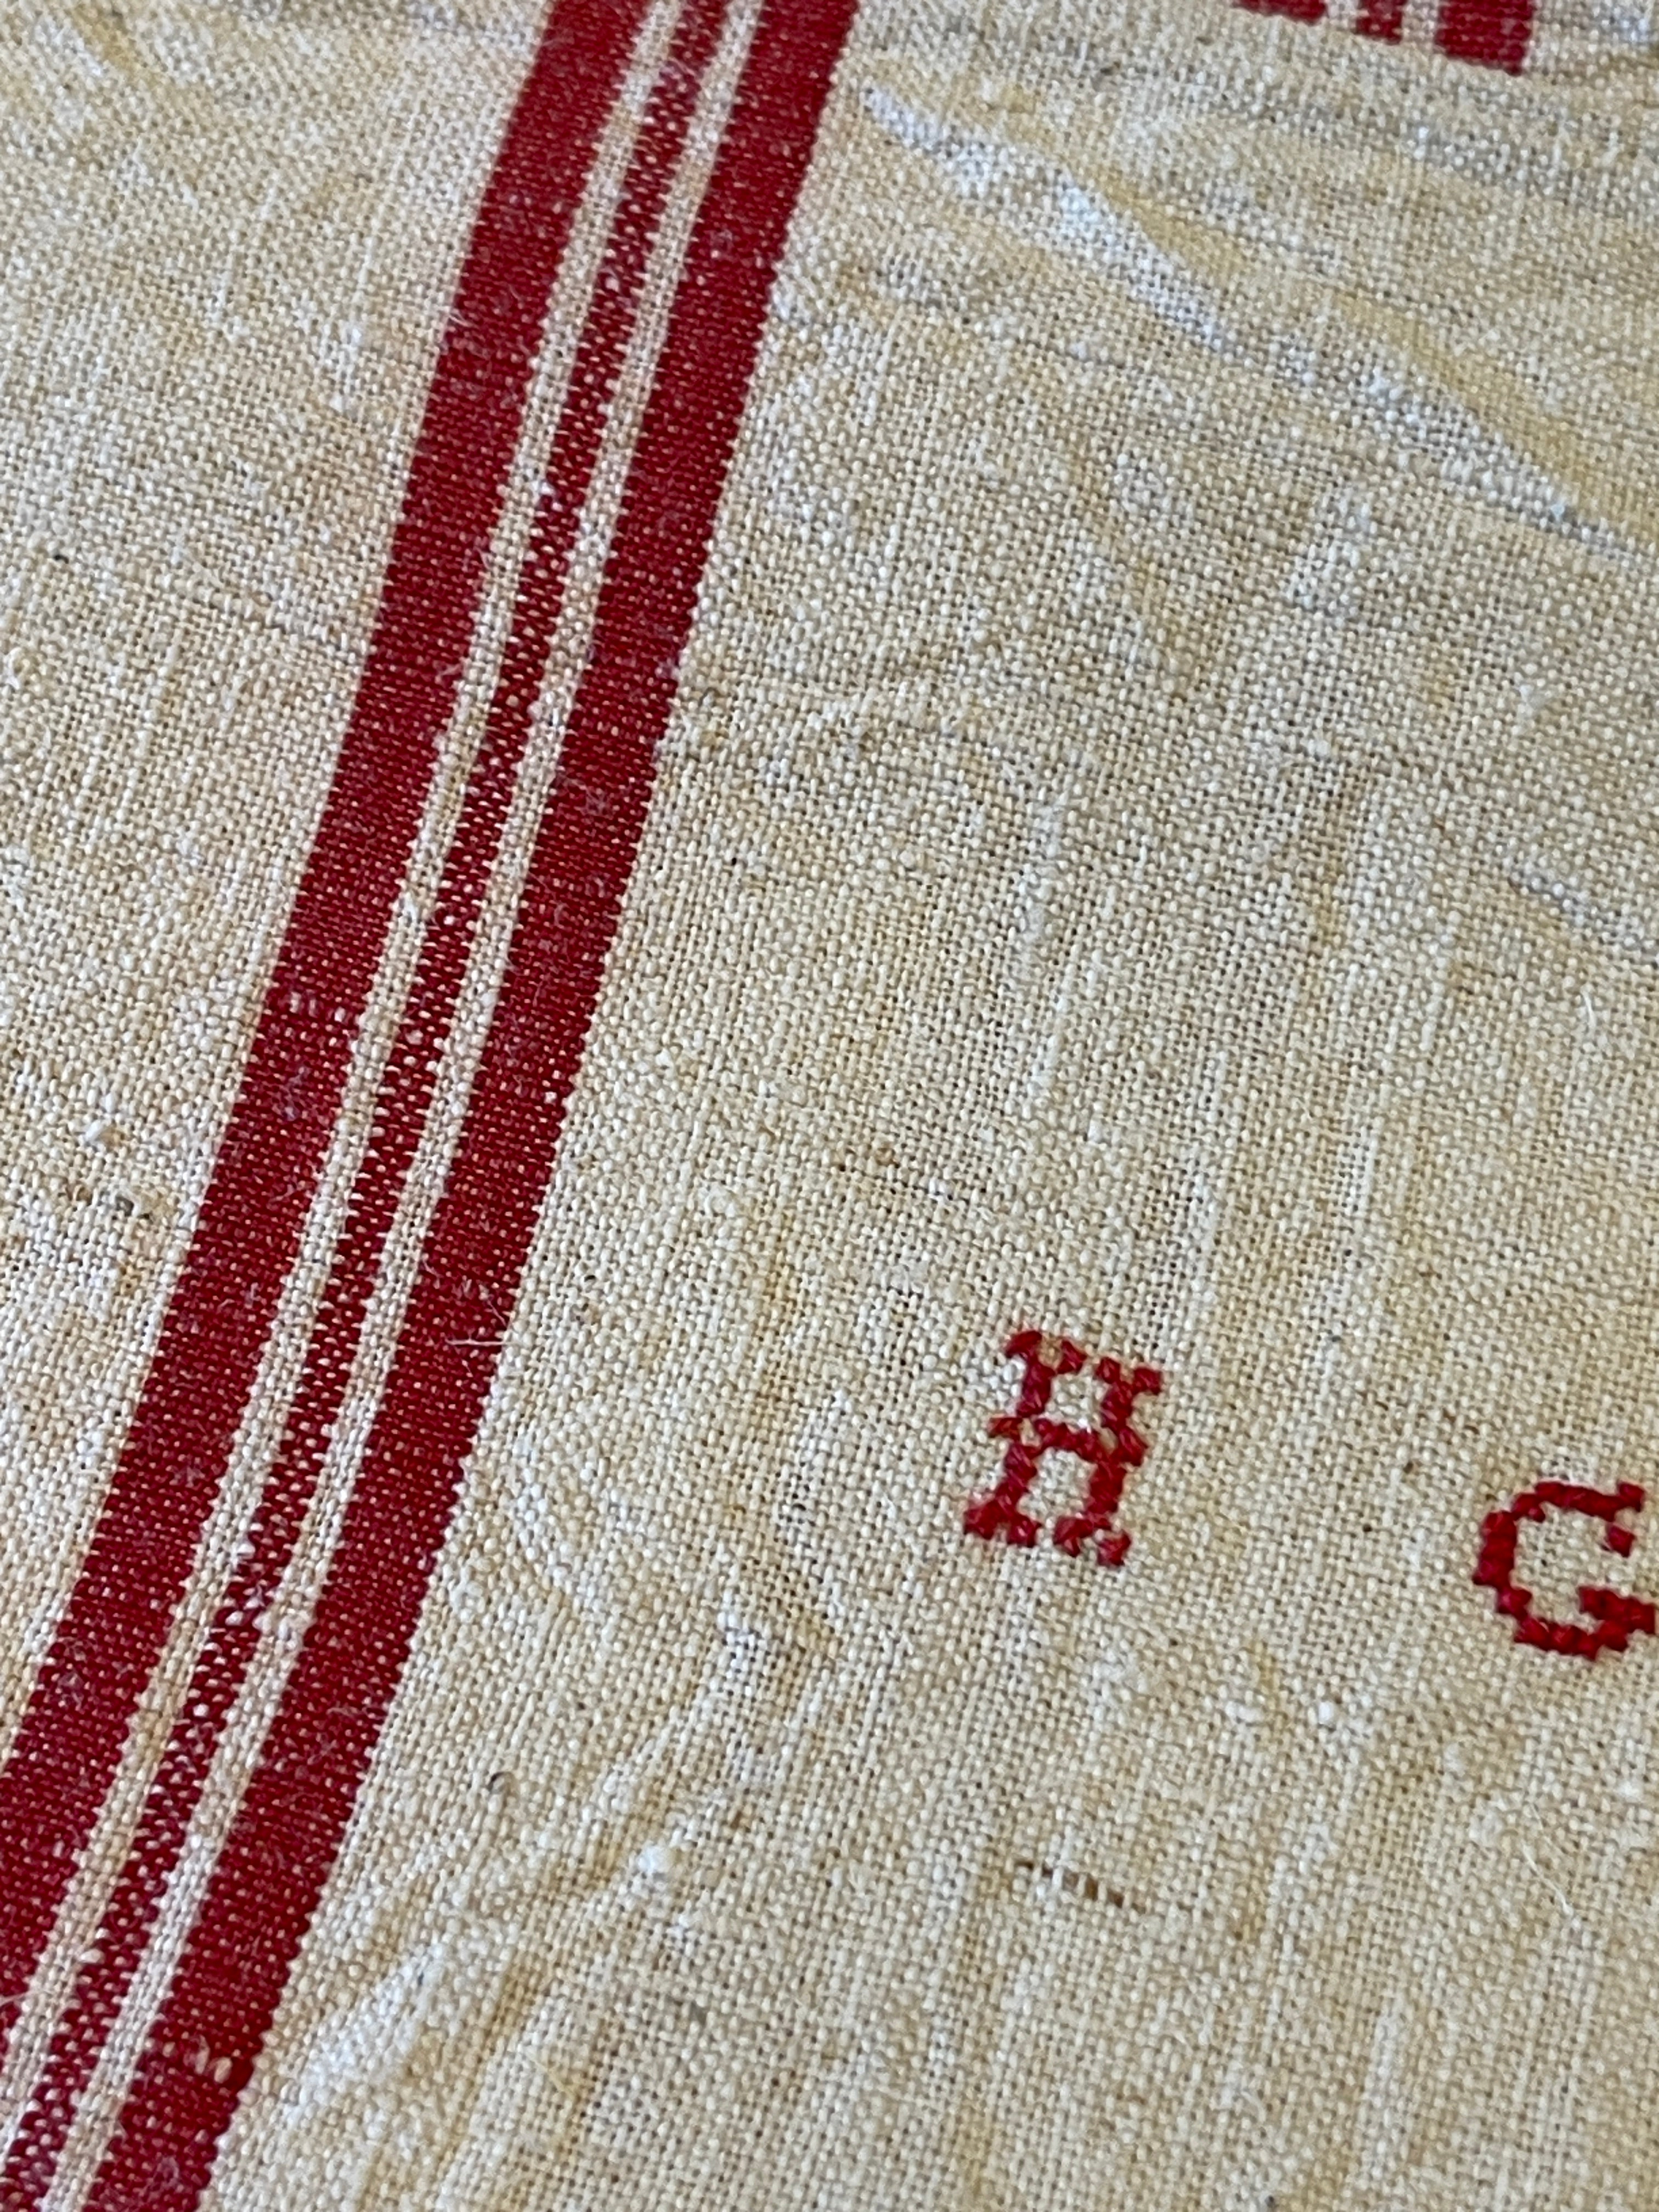 Antique Linen/Hemp Red Striped Torchon  - HG